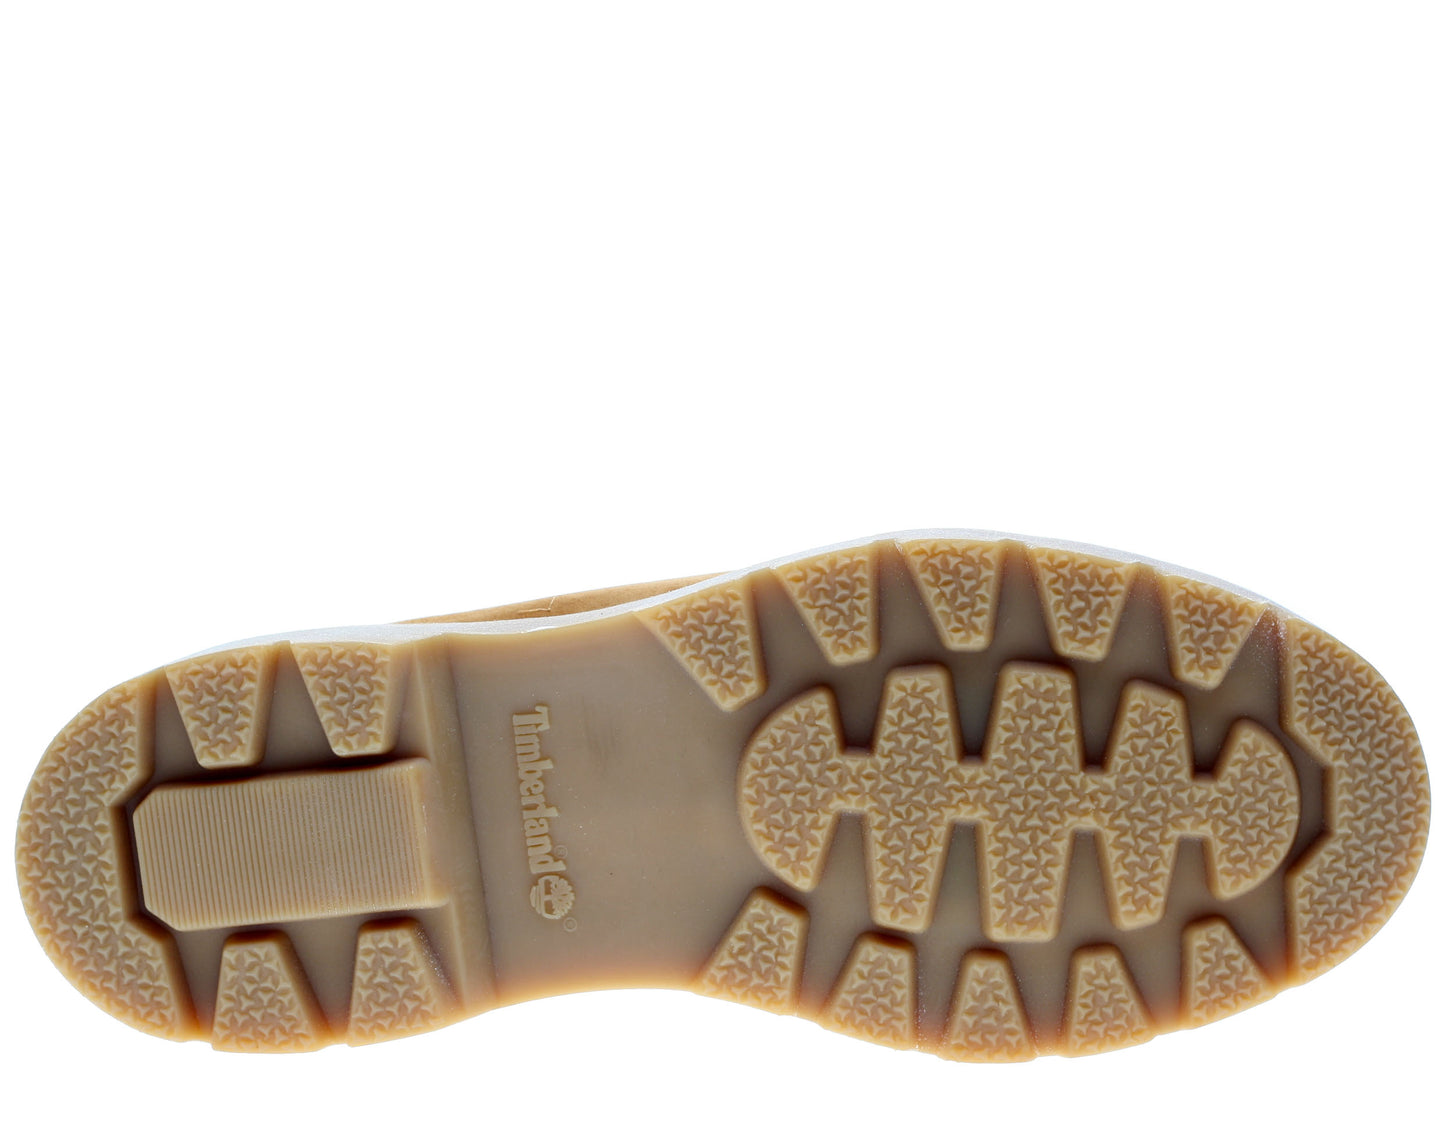 Timberland 6-Inch Basic W/Padded Collar Waterproof Wheat Men's Boots 18094